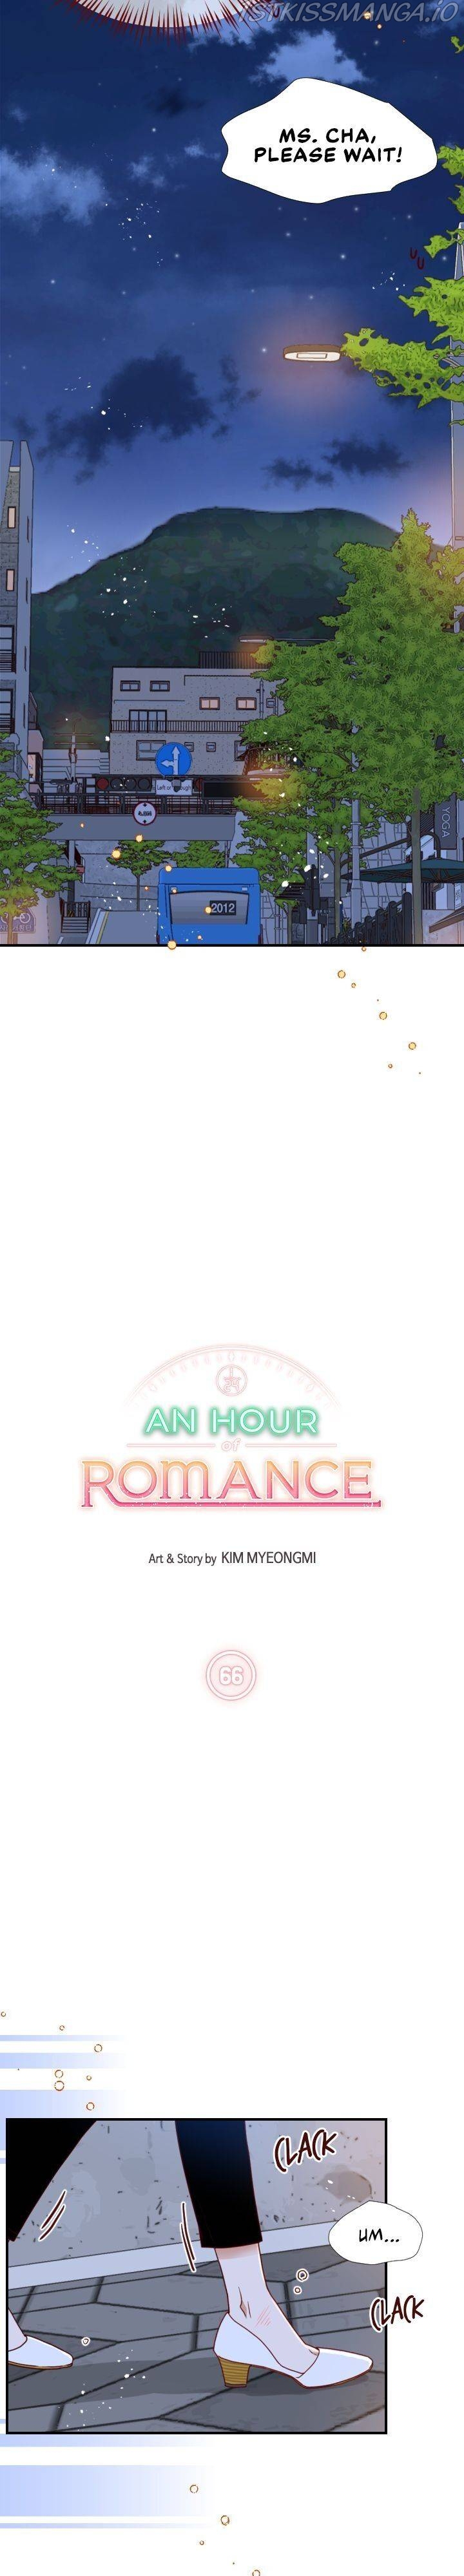 1/24 Romance - Page 2